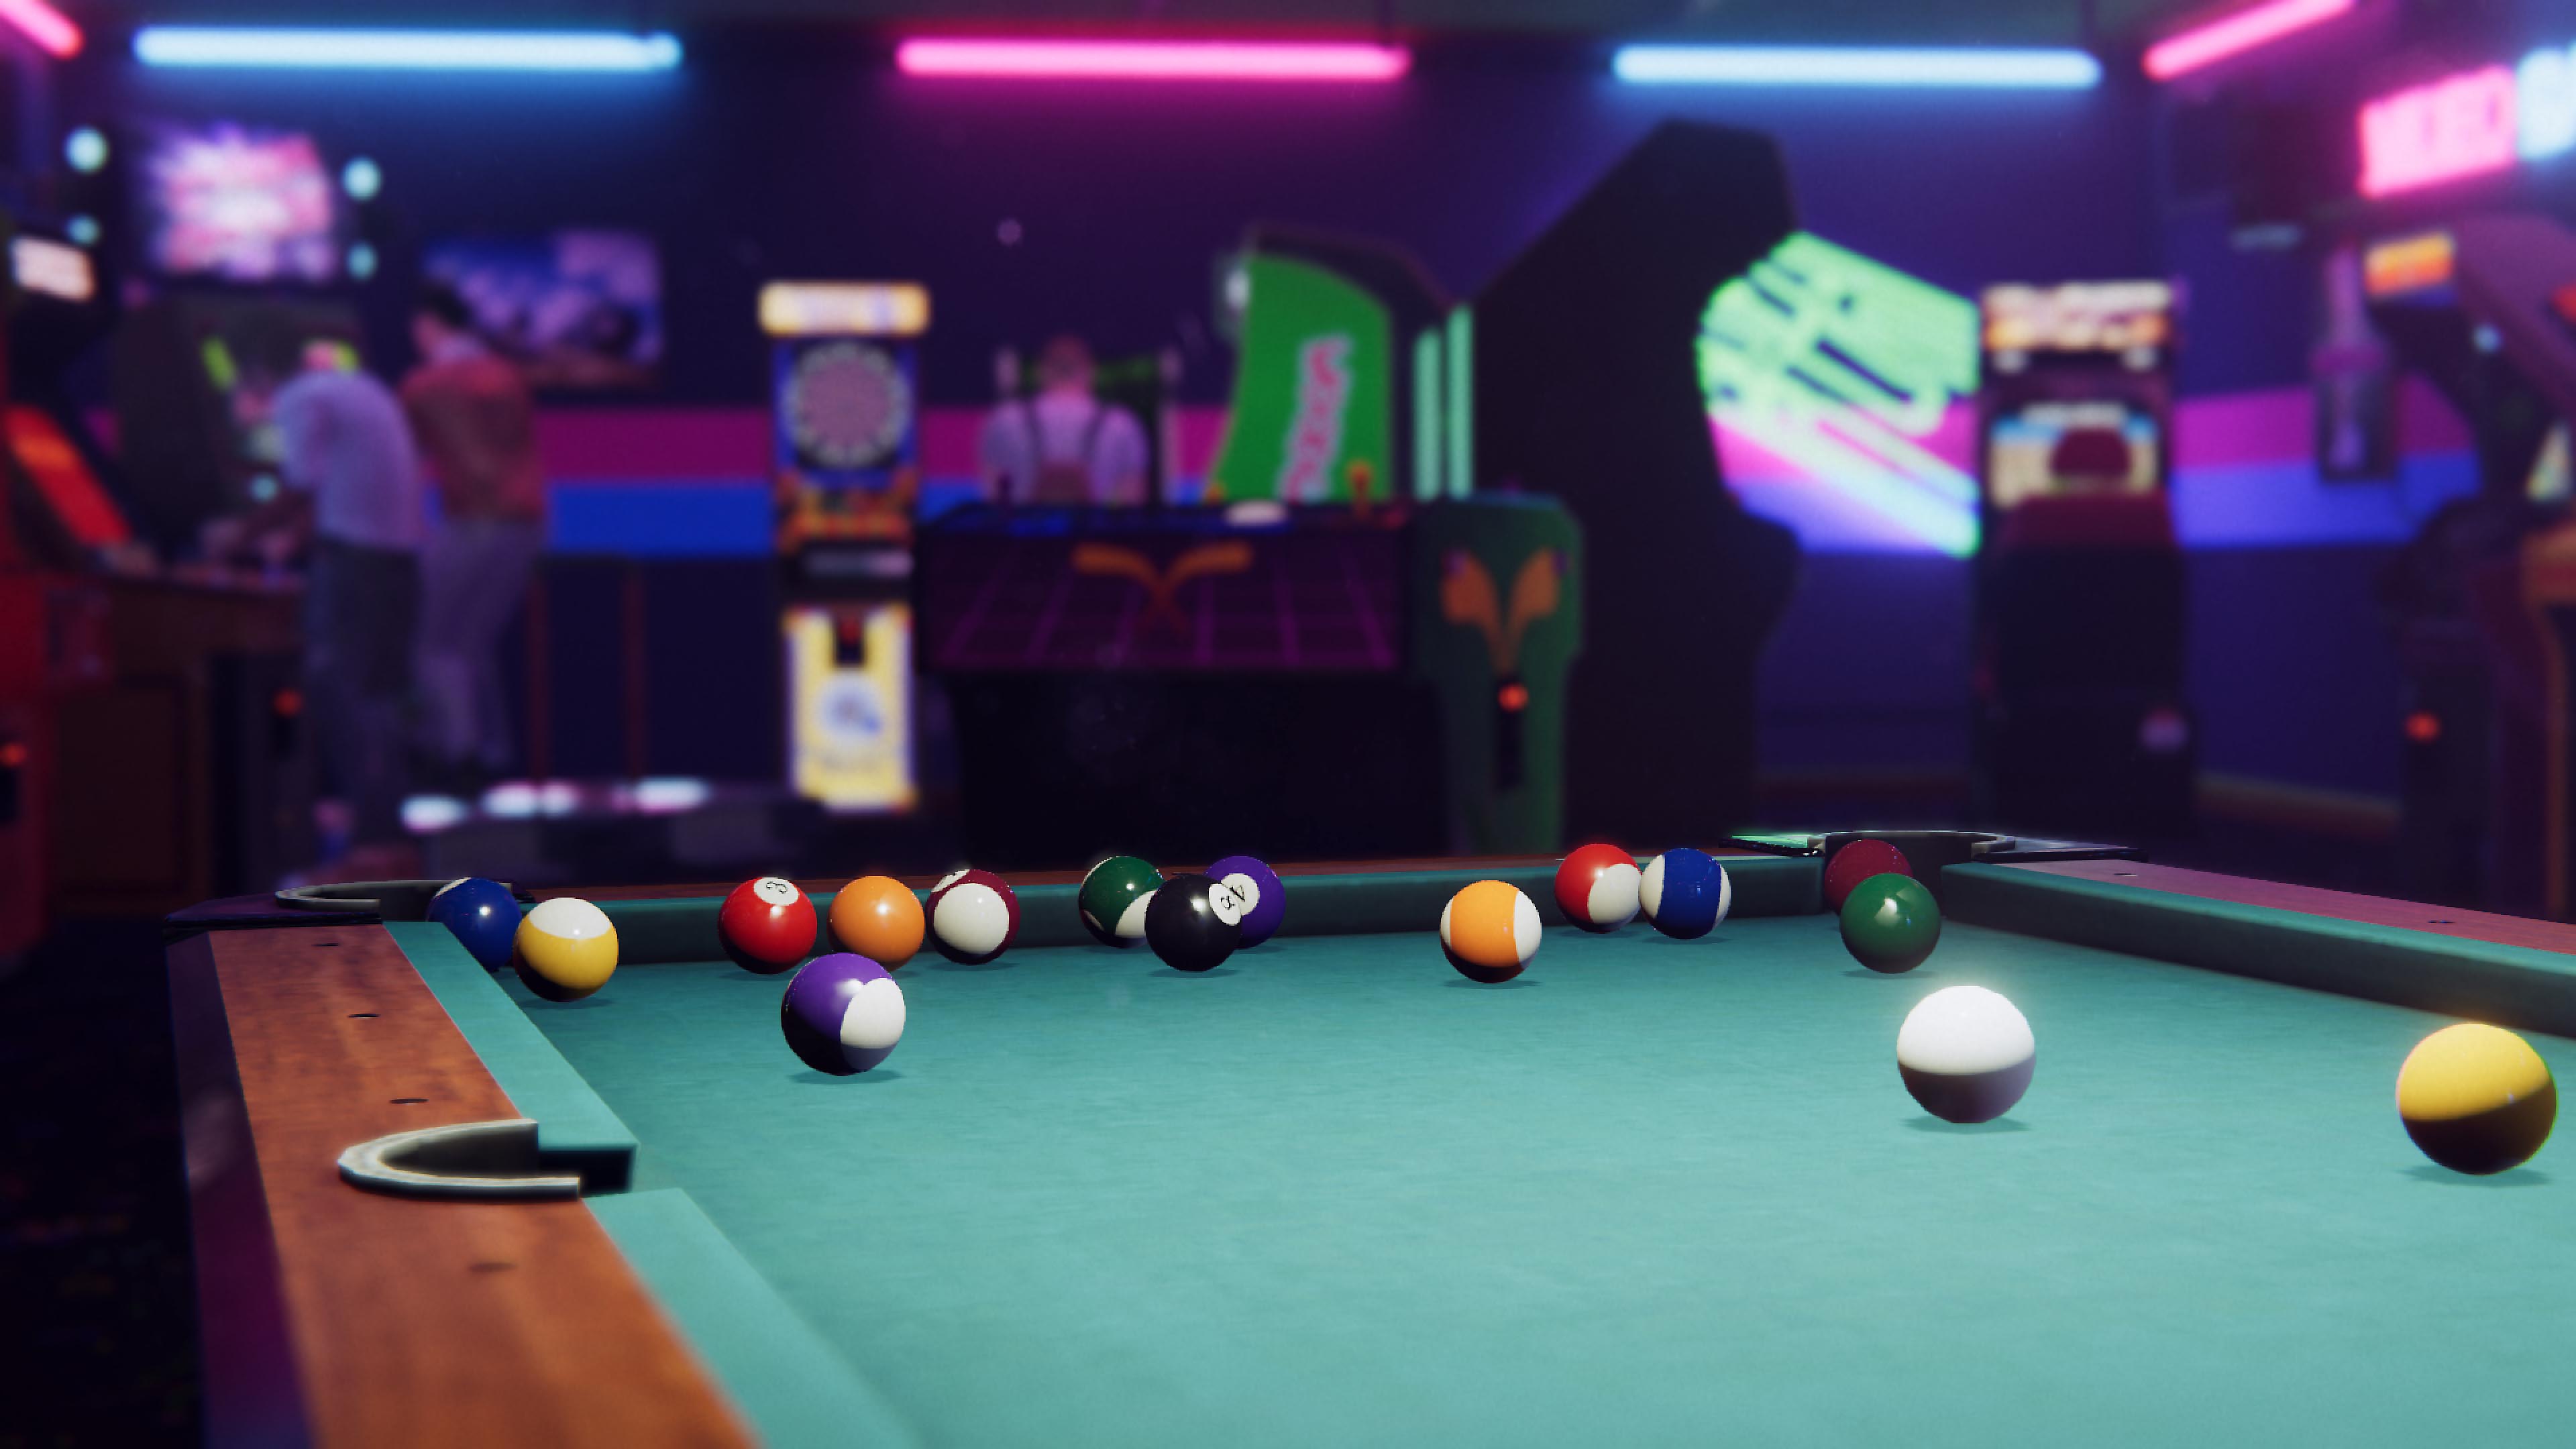 Captura de pantalla de Arcade Paradise que muestra una mesa de billar